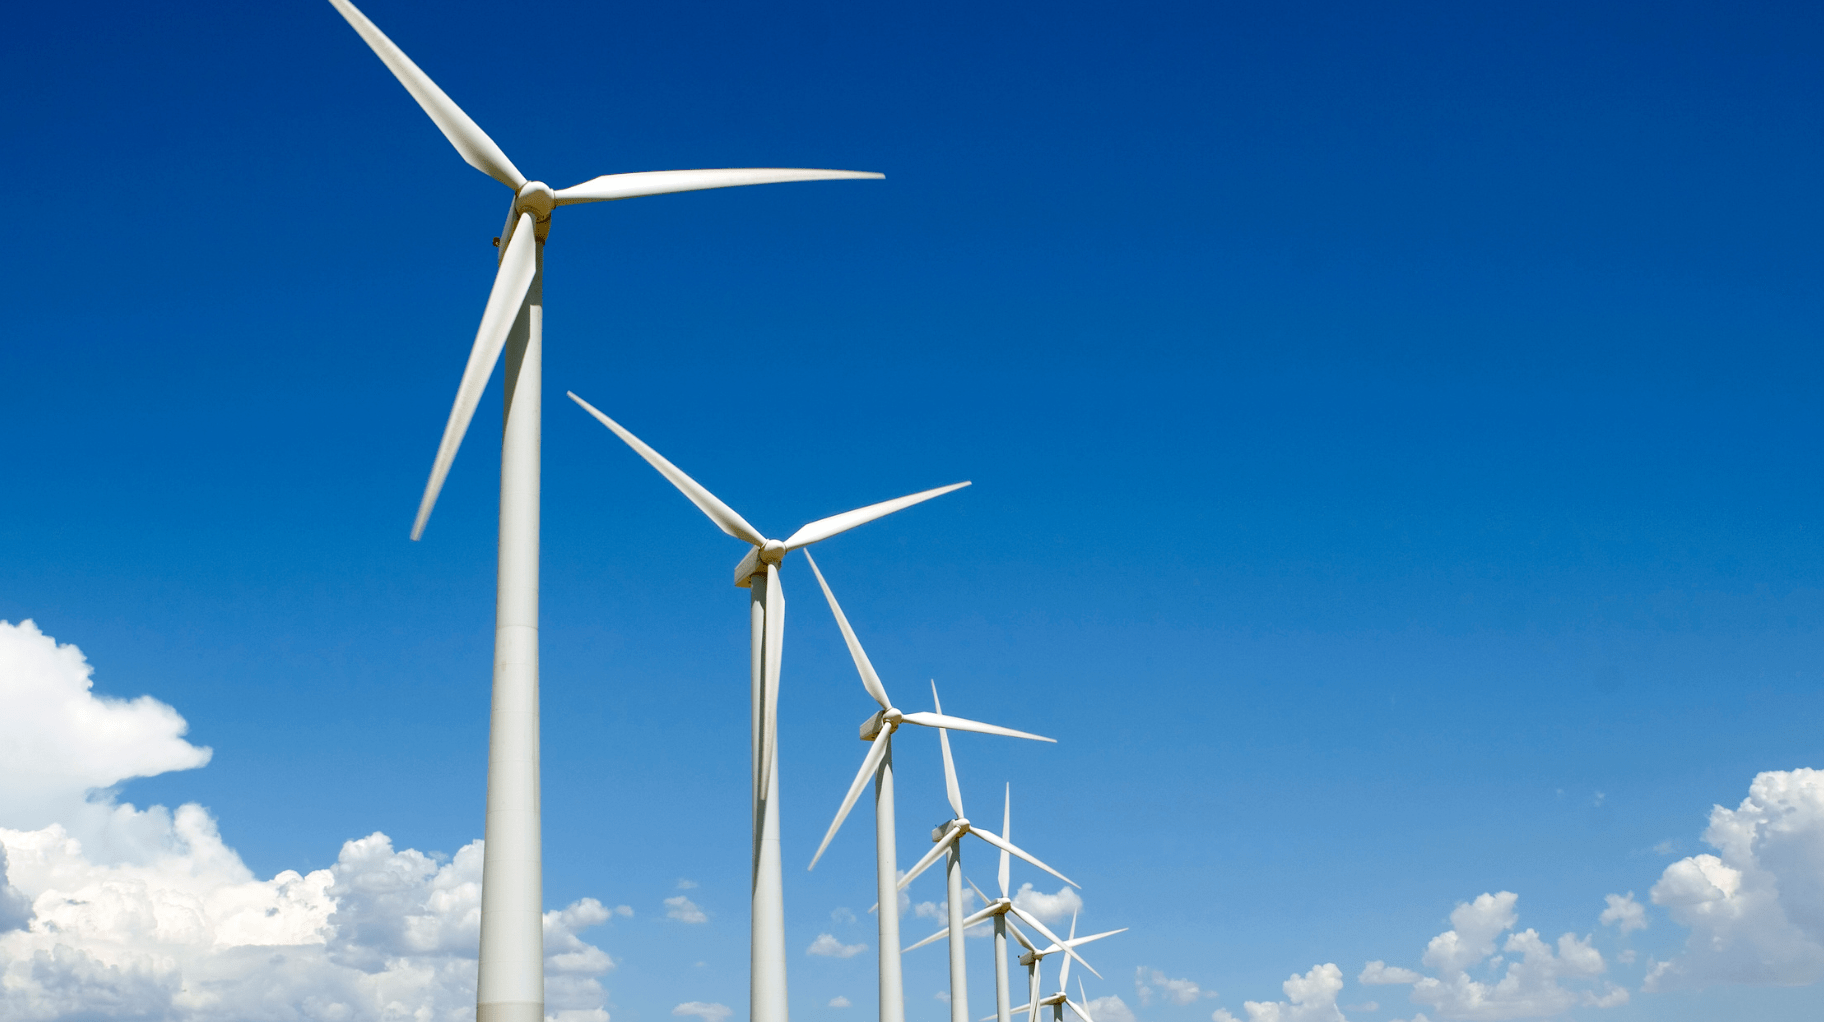 Global Wind Turbine Market Outlook, Opportunities And Strategies – Includes Wind Turbine Market Size